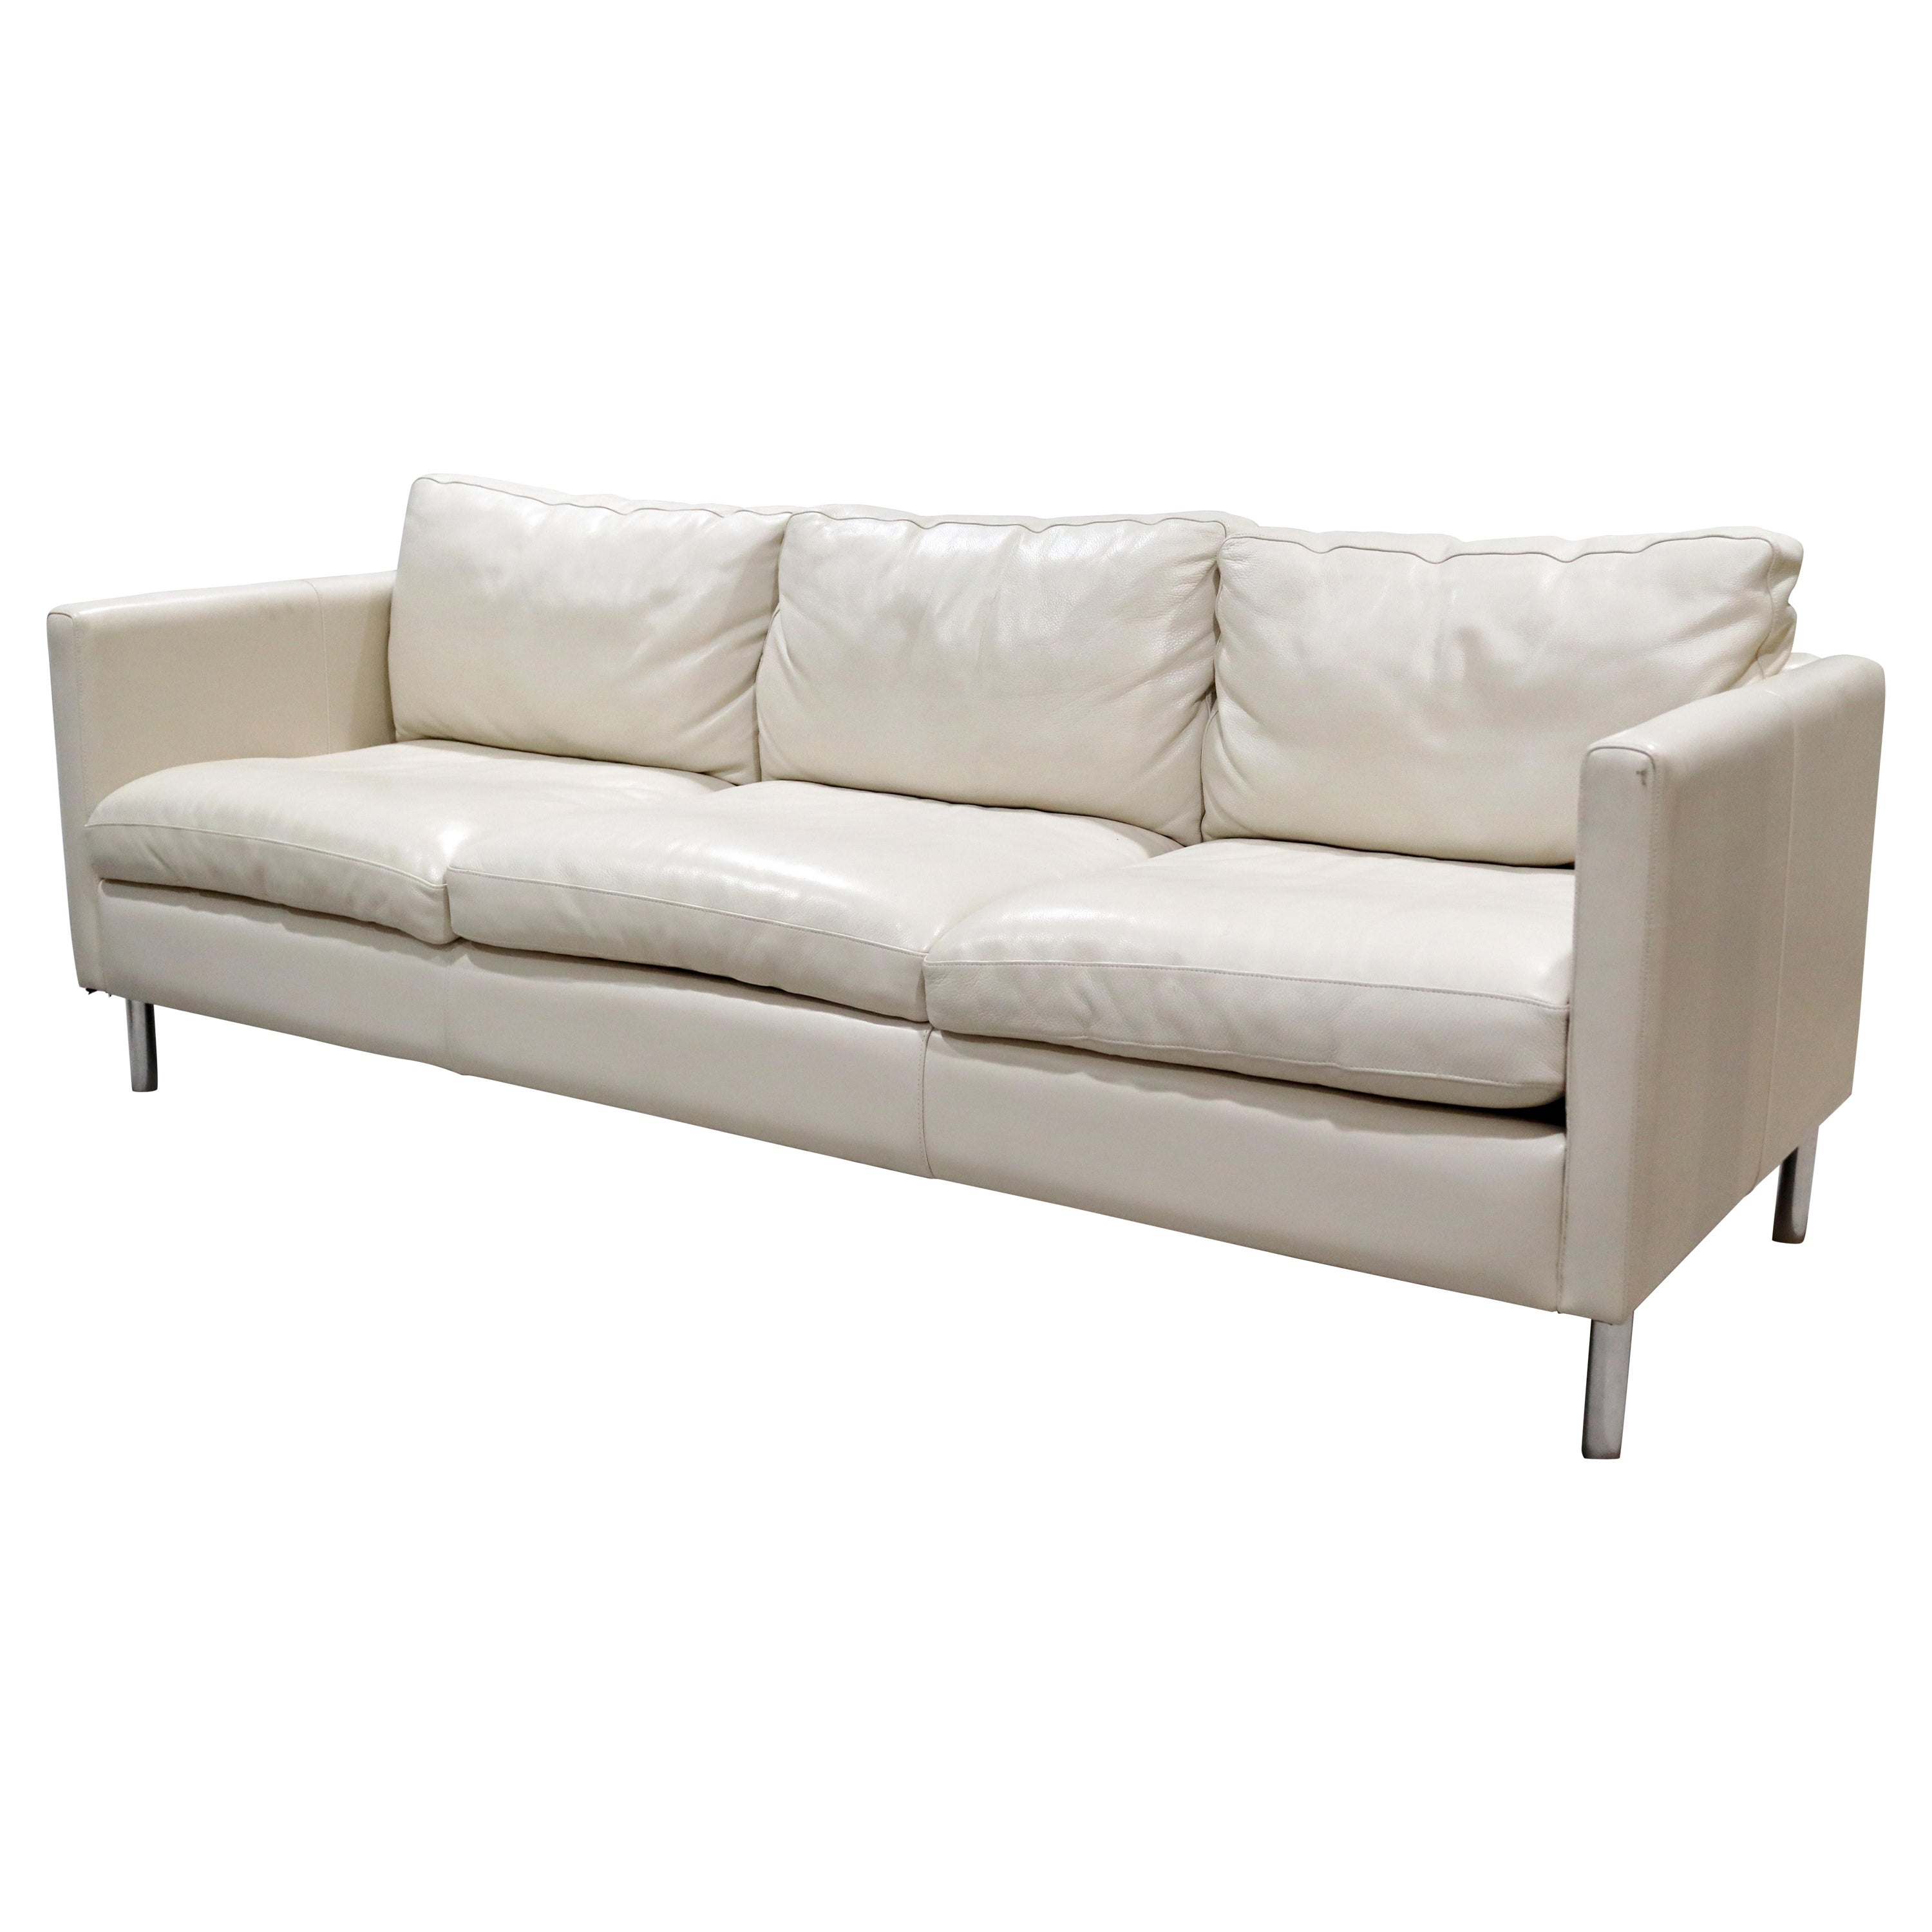 Contemporary Cream Leather Sofa on Chrome Legs